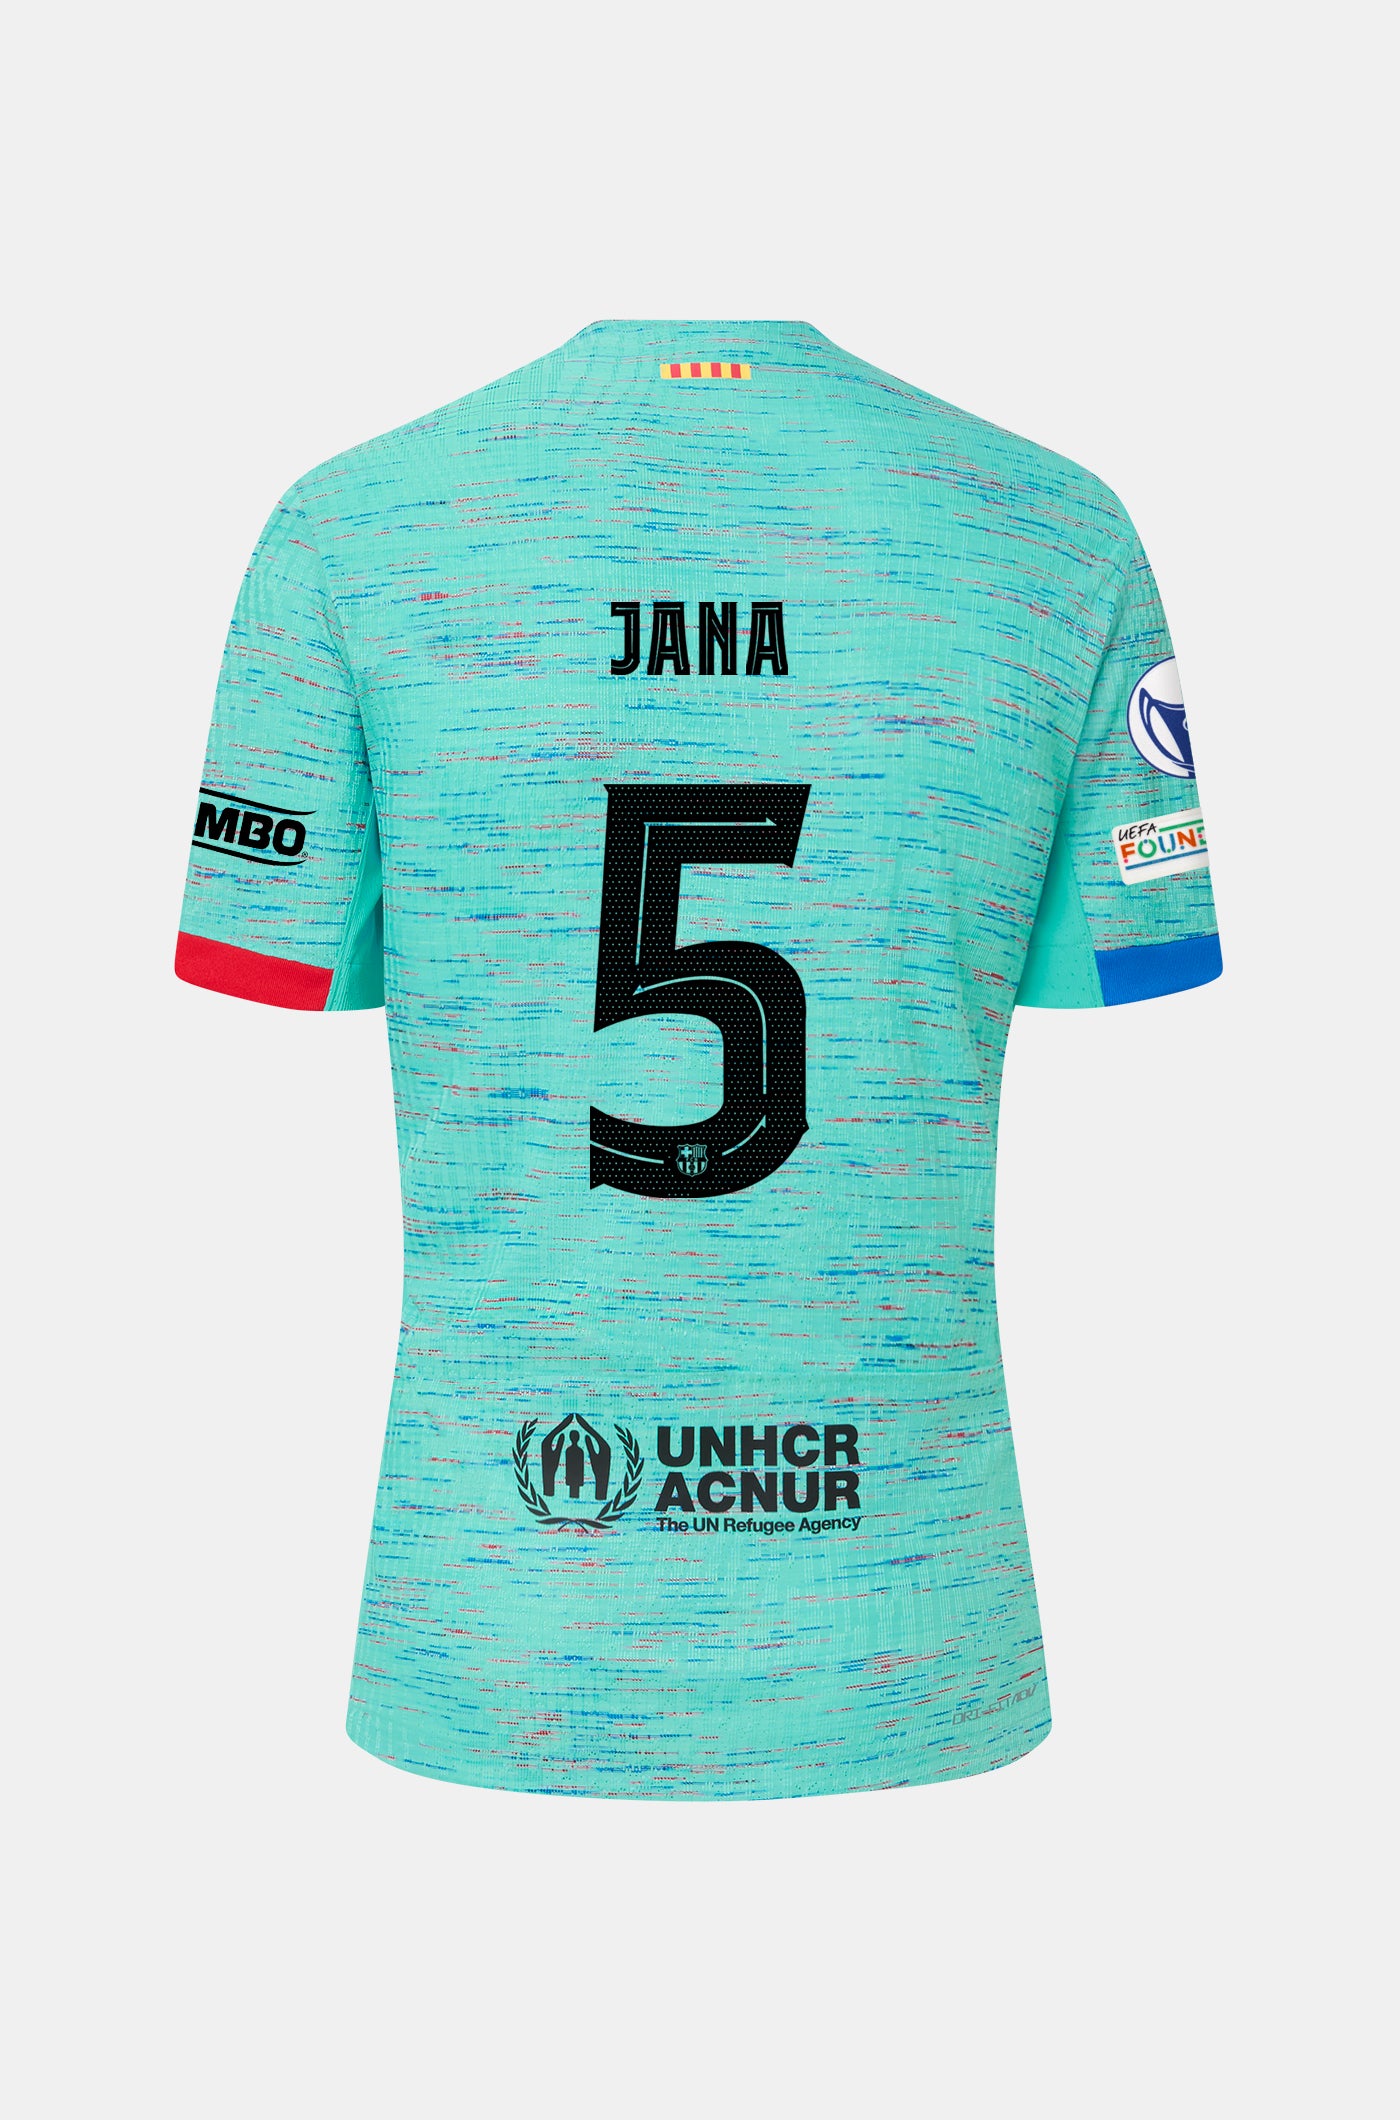 UWCL FC Barcelona third shirt 23/24 Player's Edition - JANA